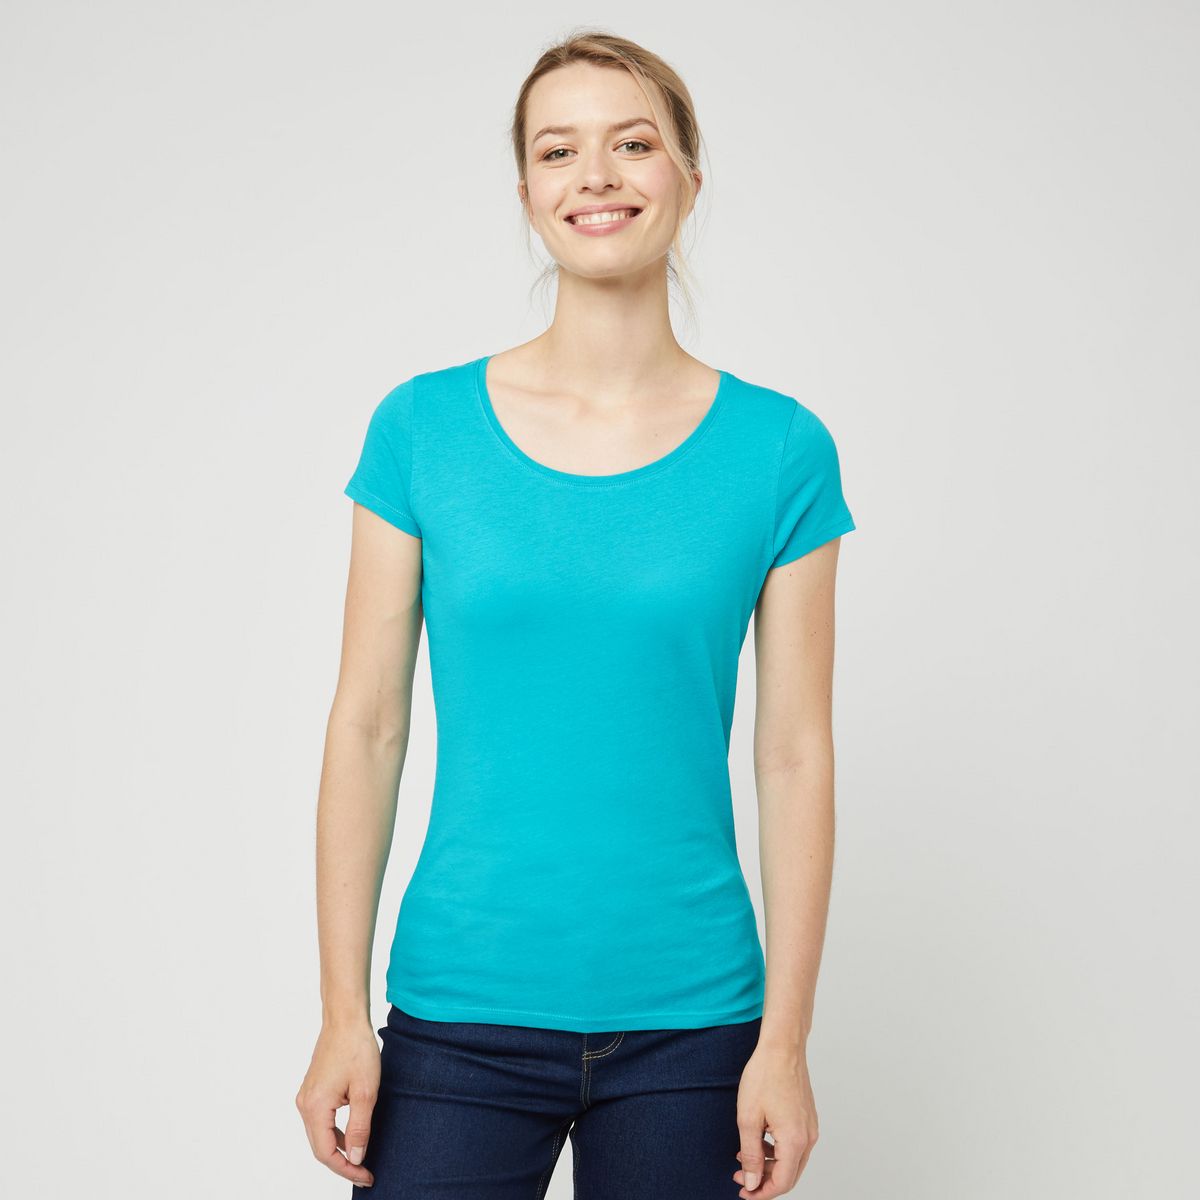 INEXTENSO T-shirt manche courte turquoise uni femme